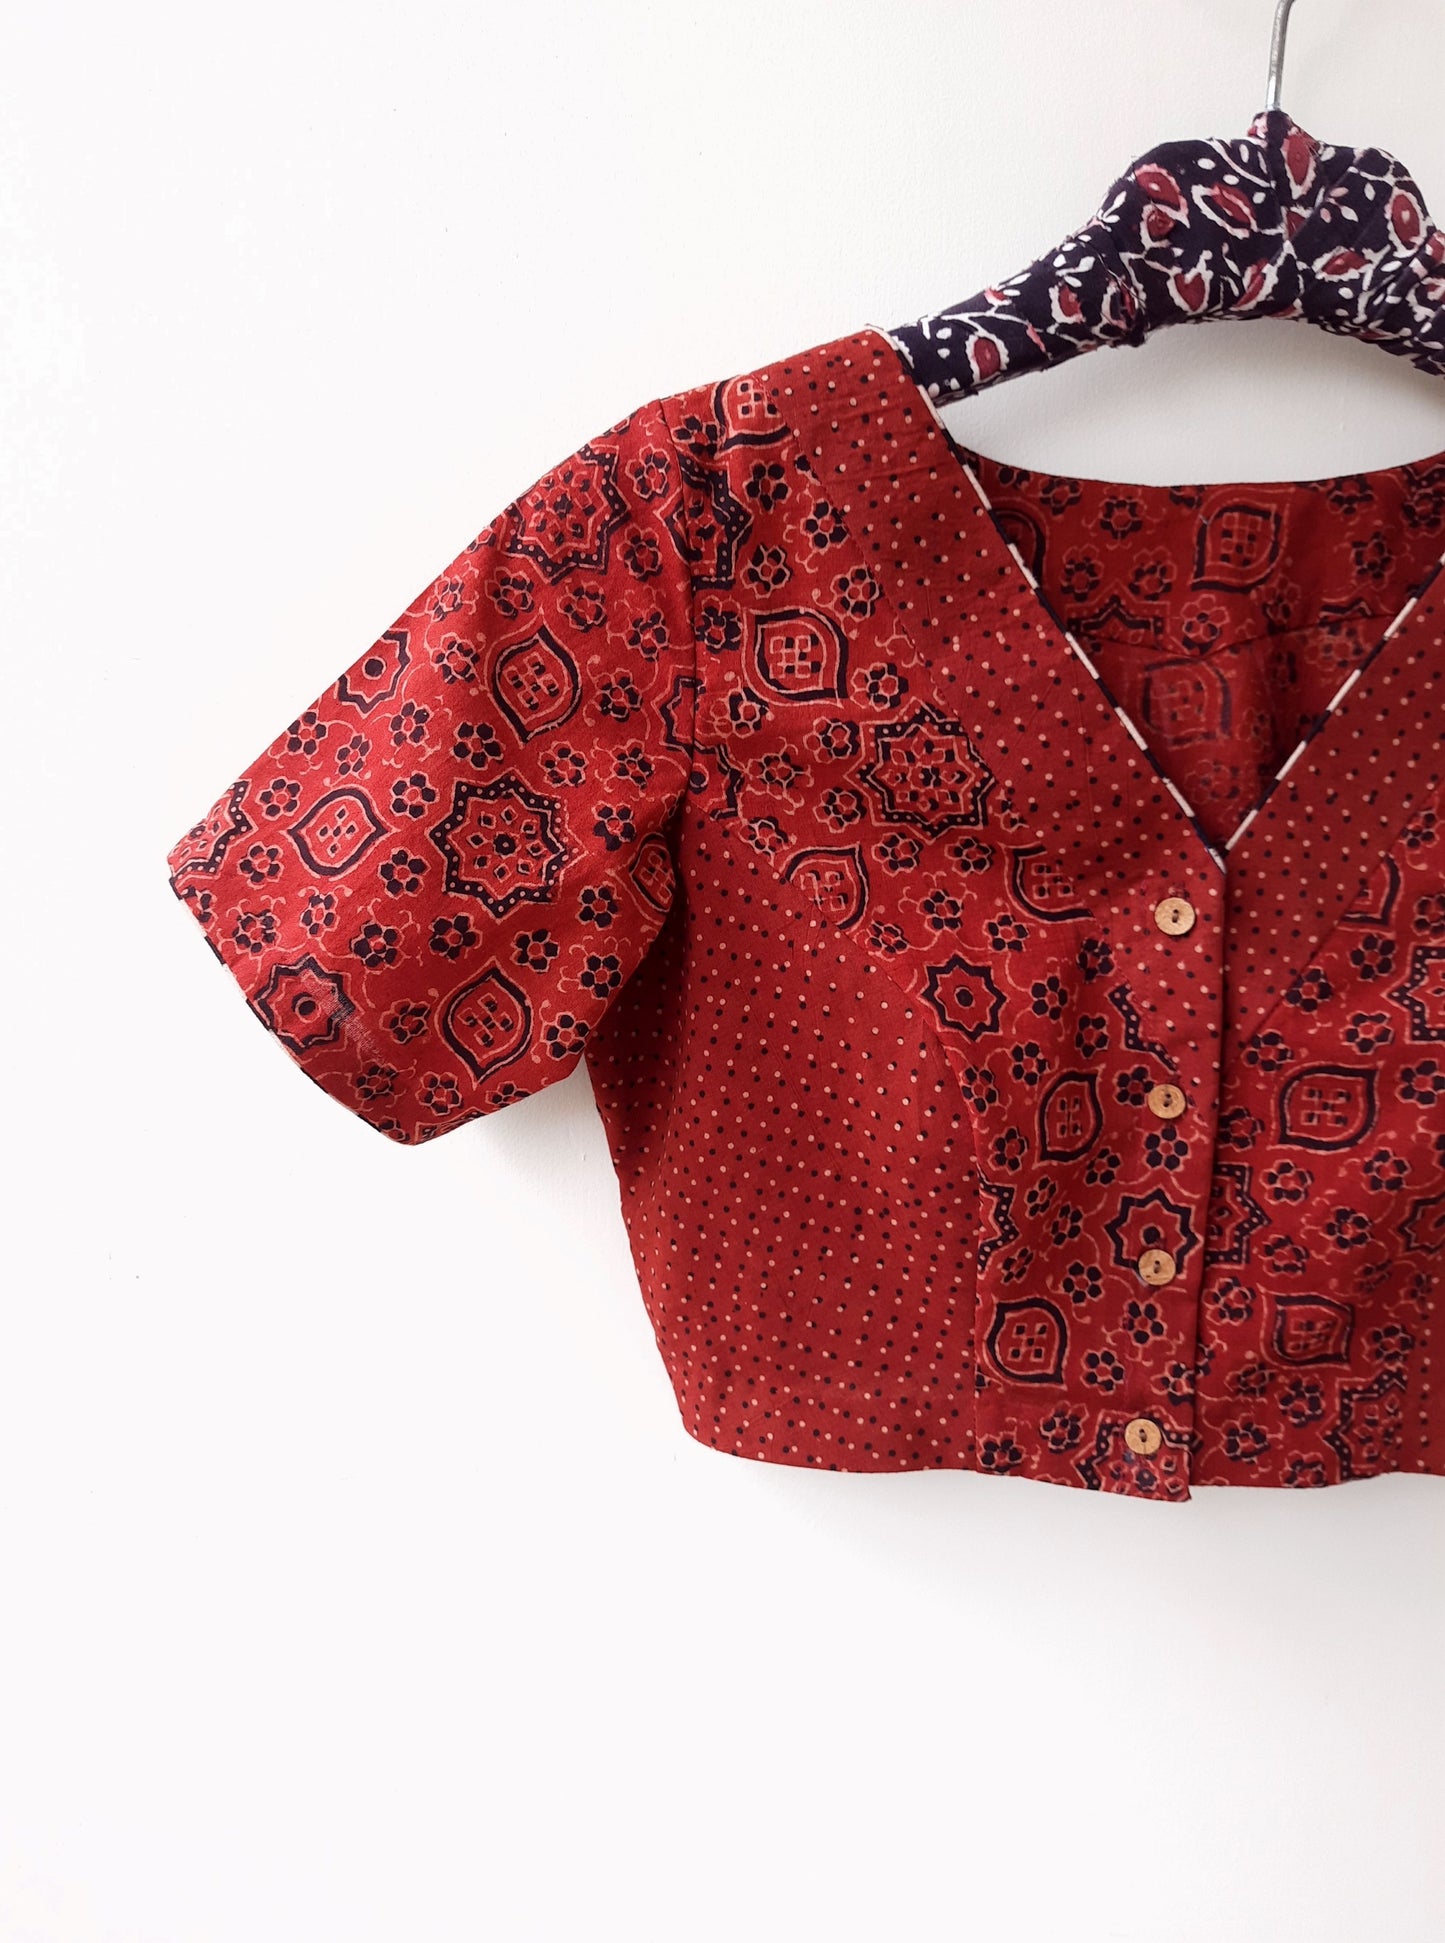 Ajrakh maroon blouse, Ajrakh prints saree blouse in maroon color, Madder red ajrakh blouse, Natural dyed ajrakh blouse